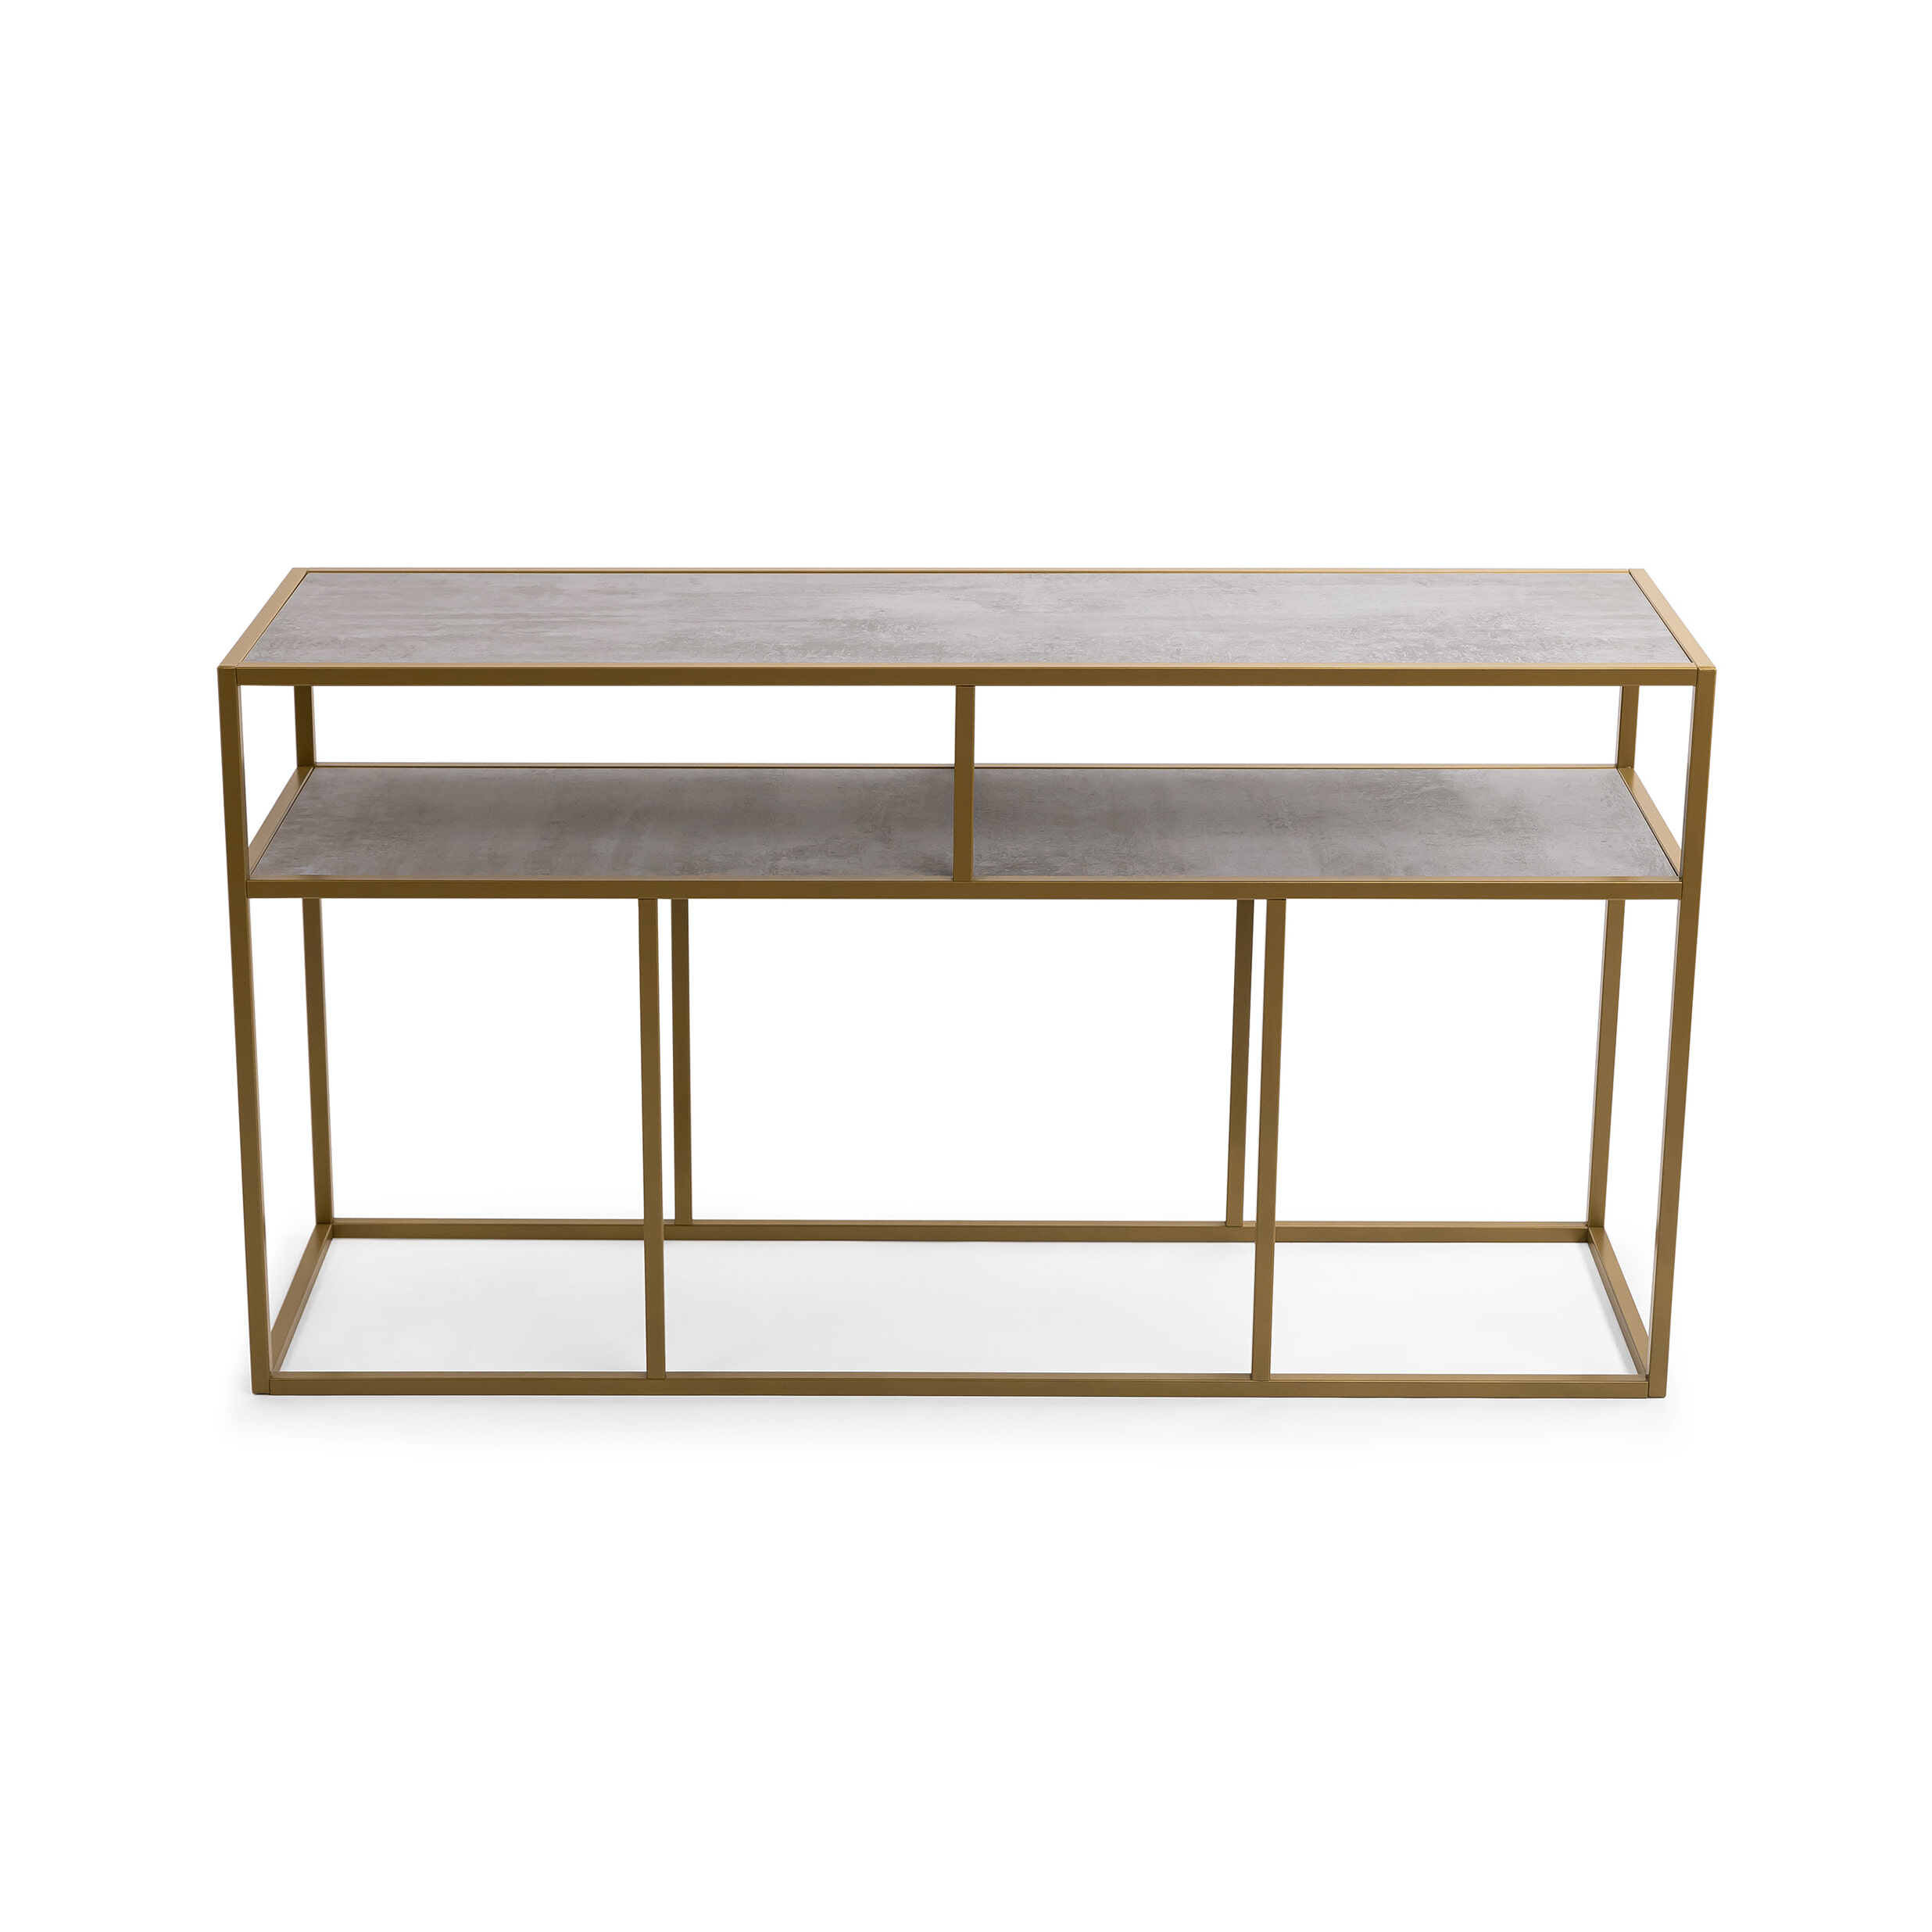 STALUX Side-table Teun 150cm - goud / beton